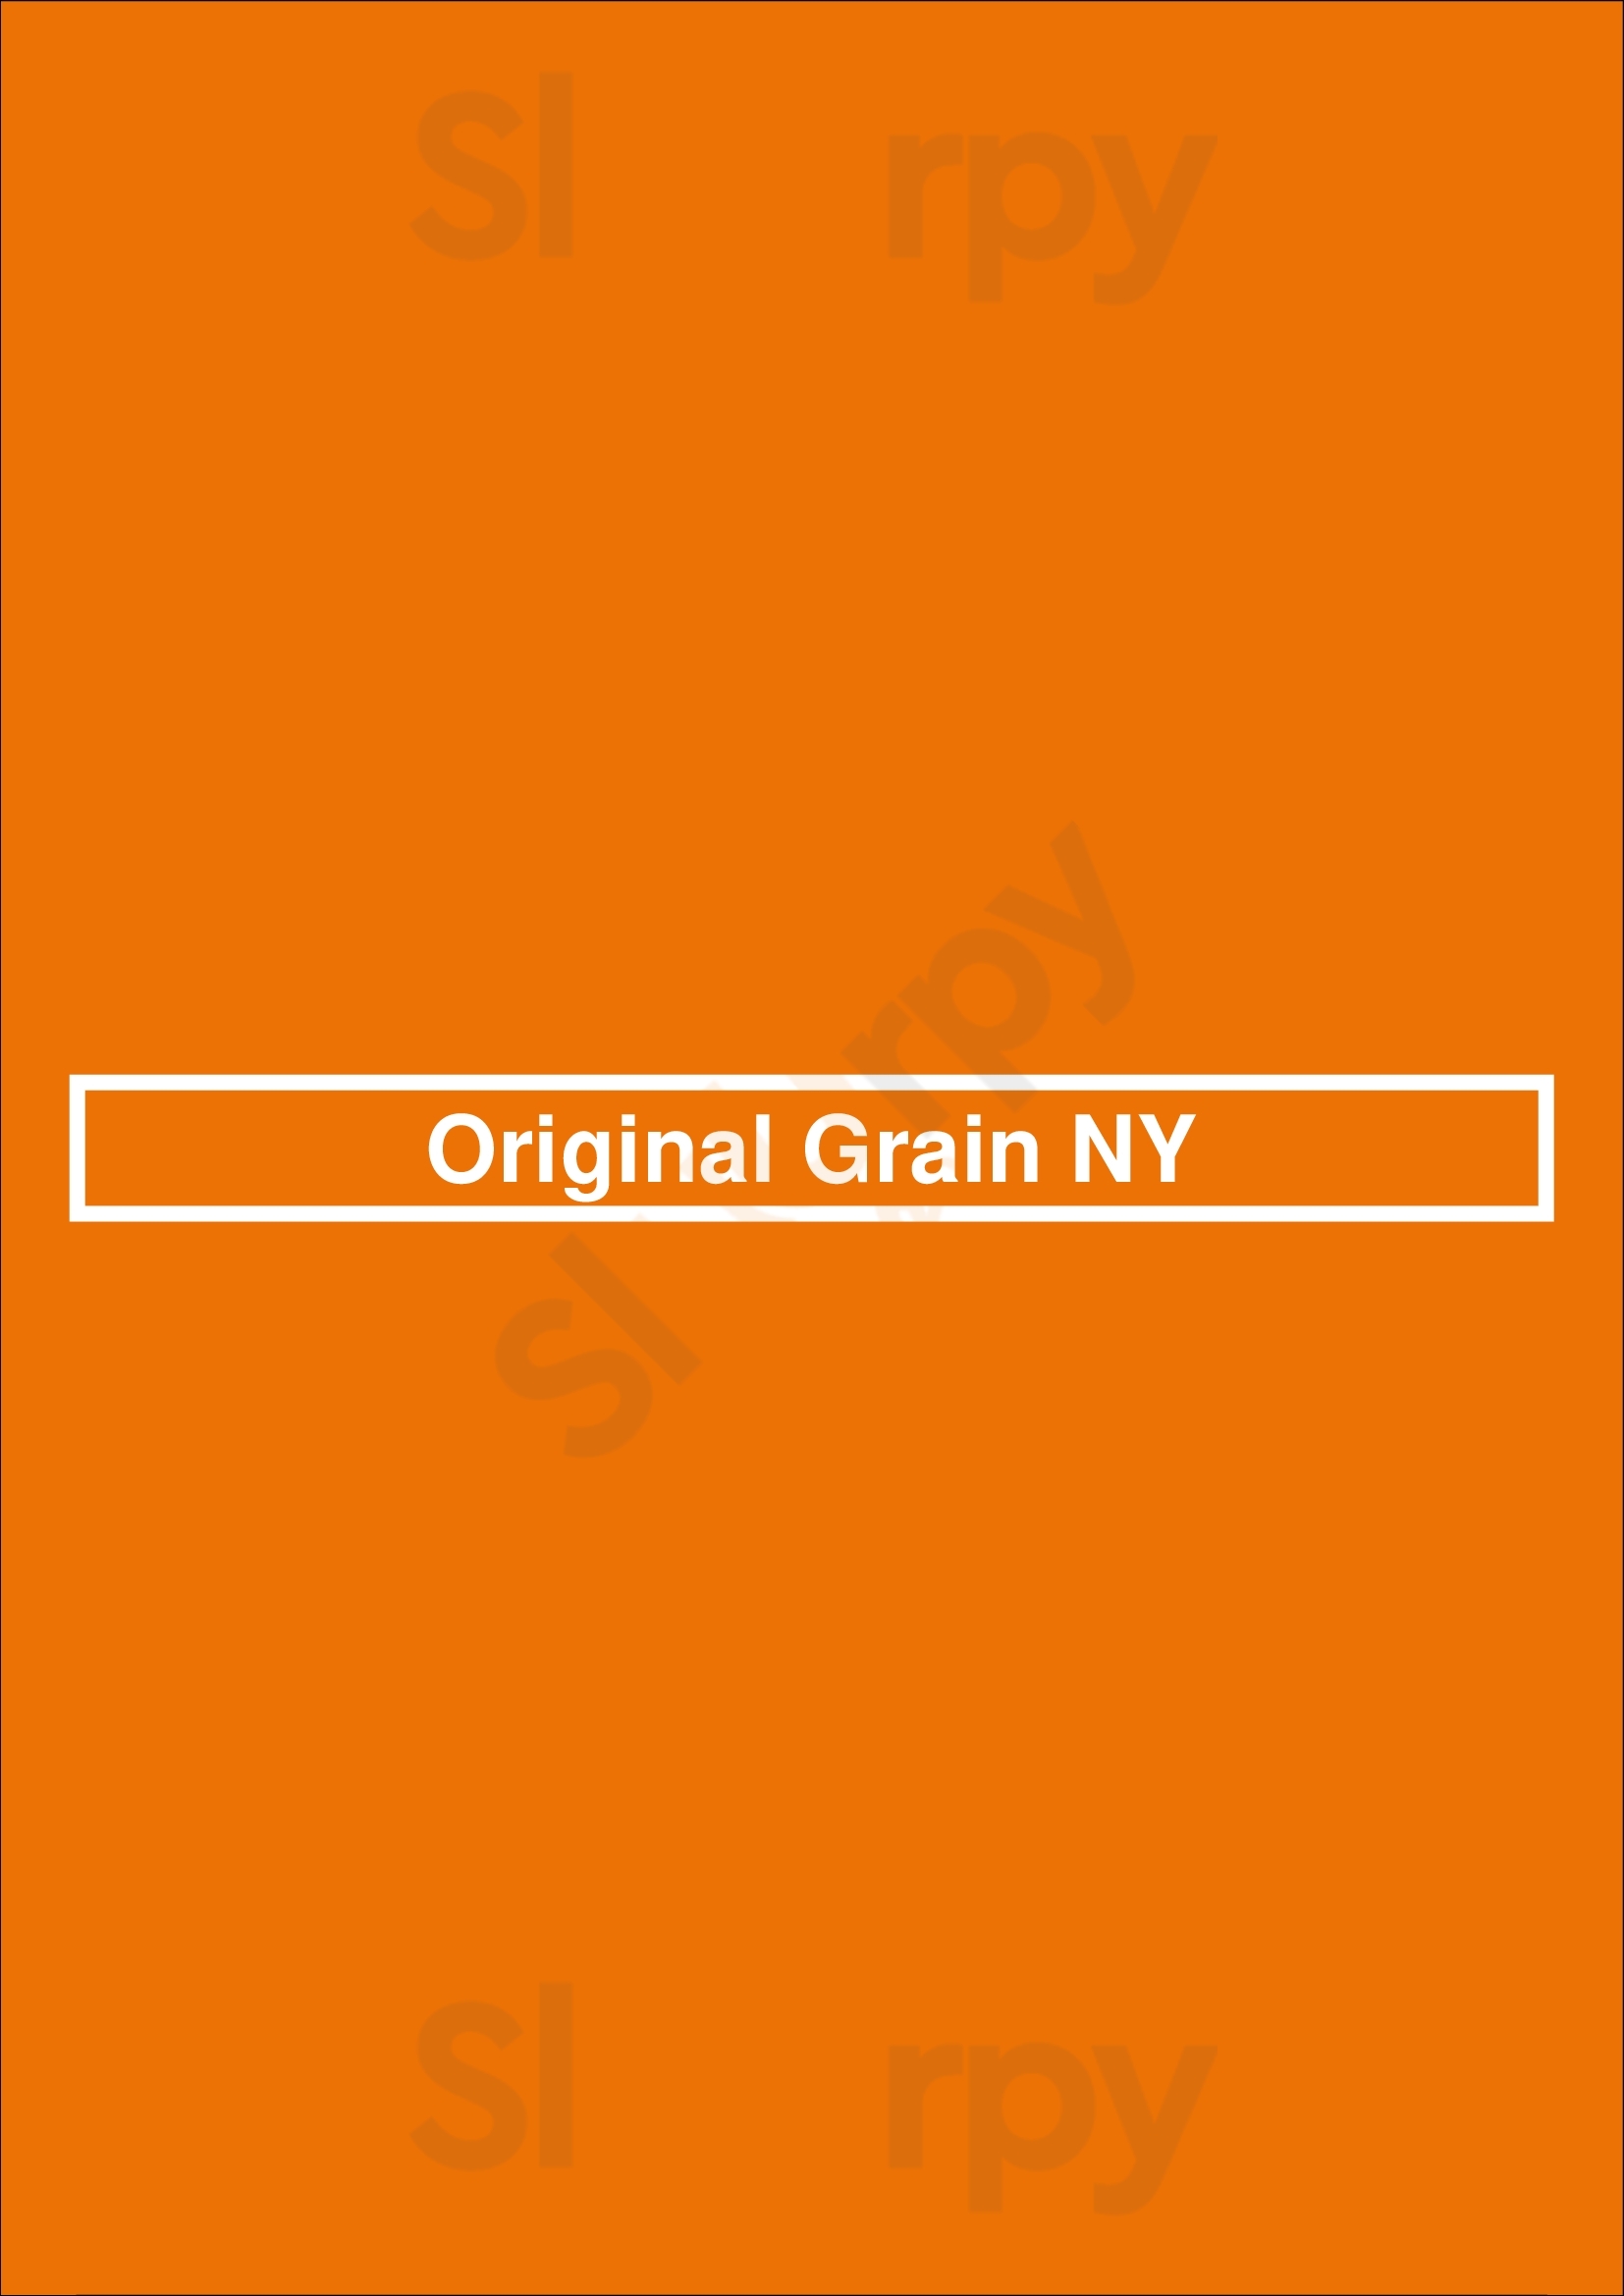 Original Grain Ny Syracuse Menu - 1